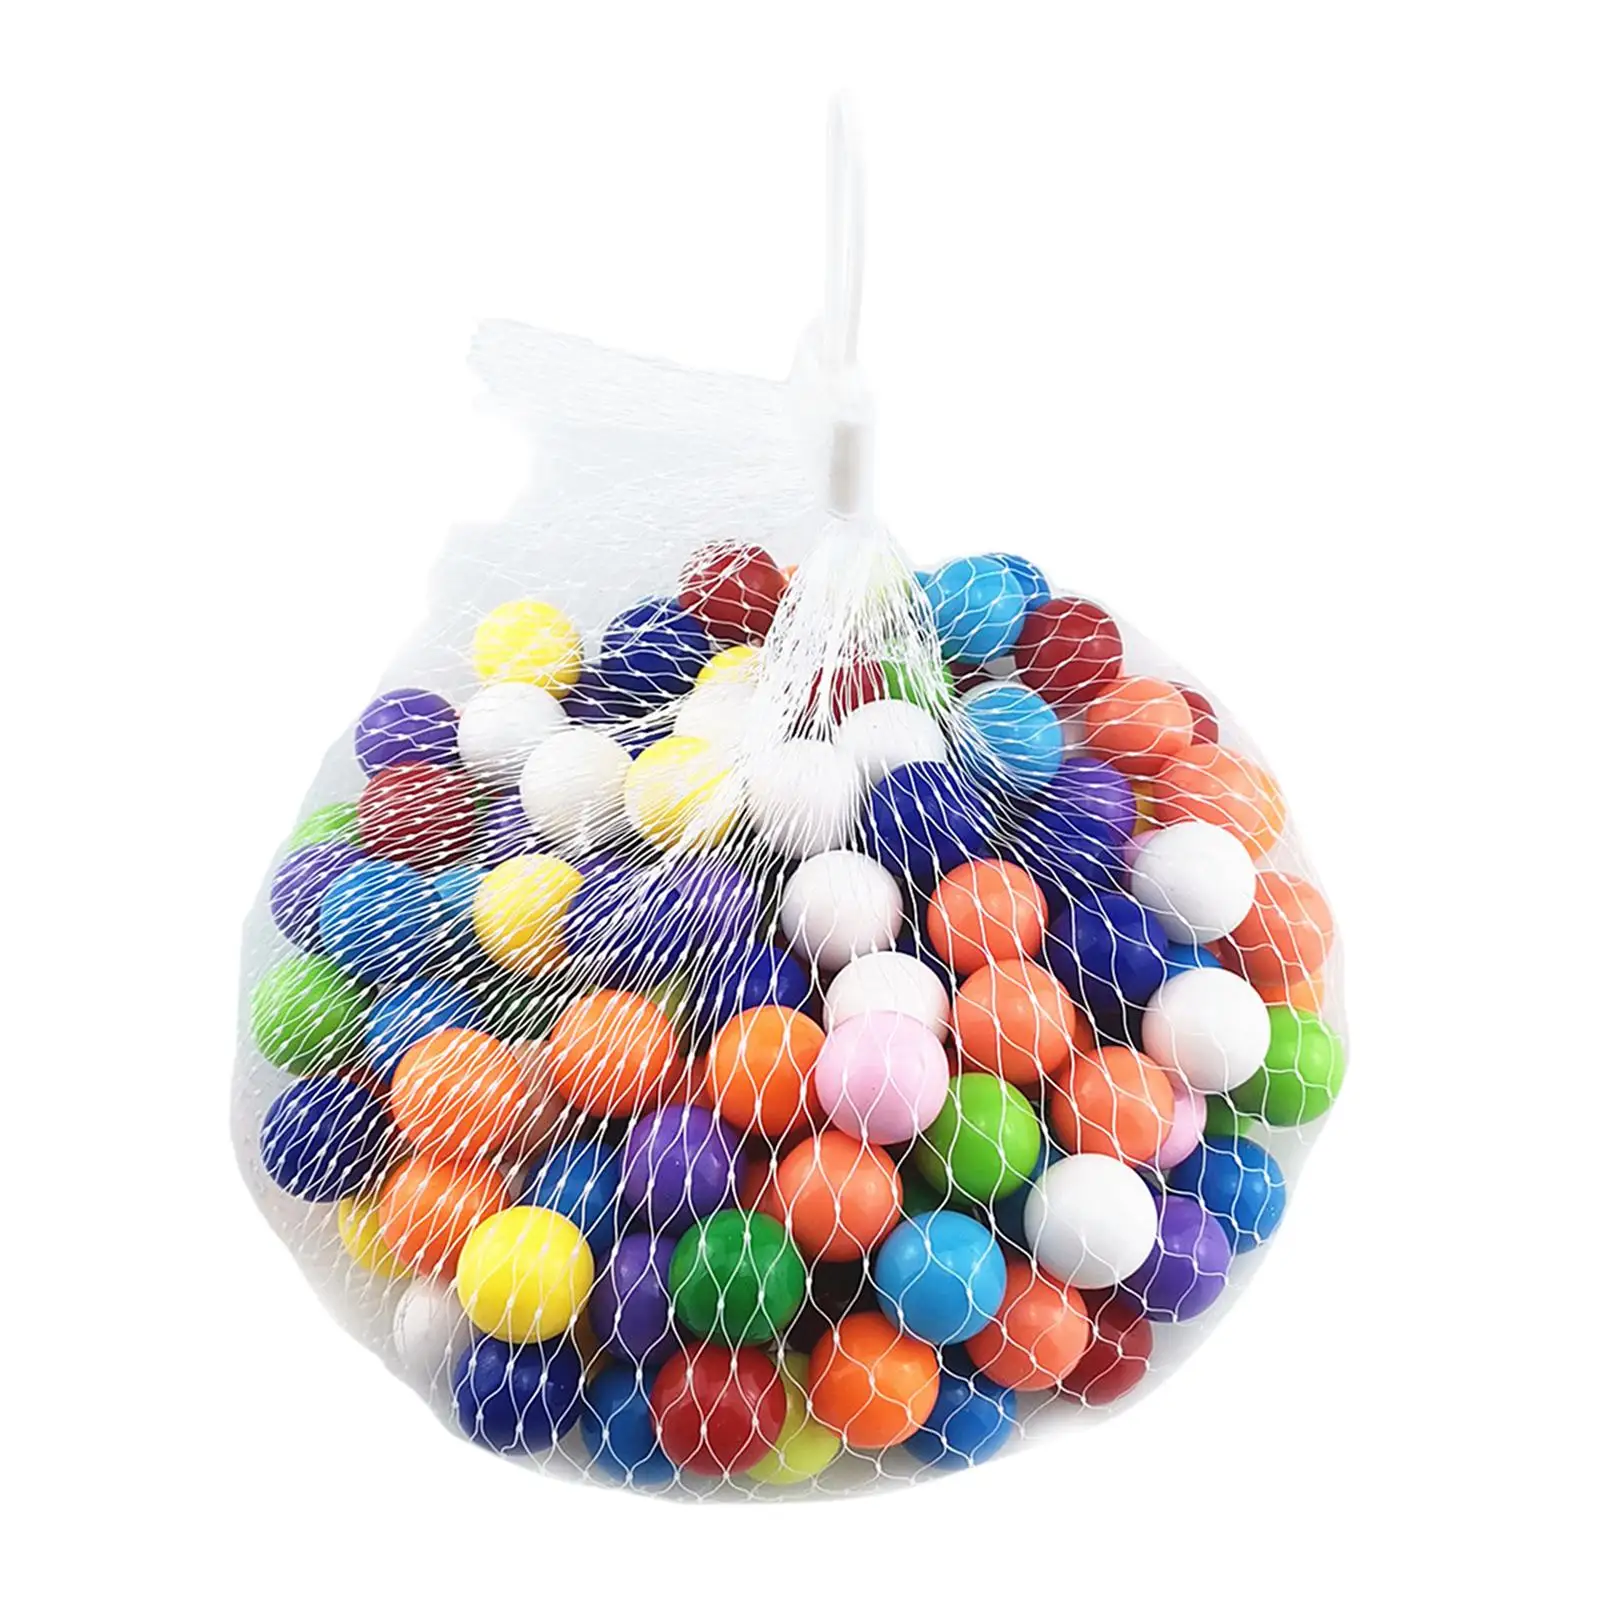 100x Acrylic Loose Beads Multipurpose Art Crafts Supplies for Parties Kindergarten